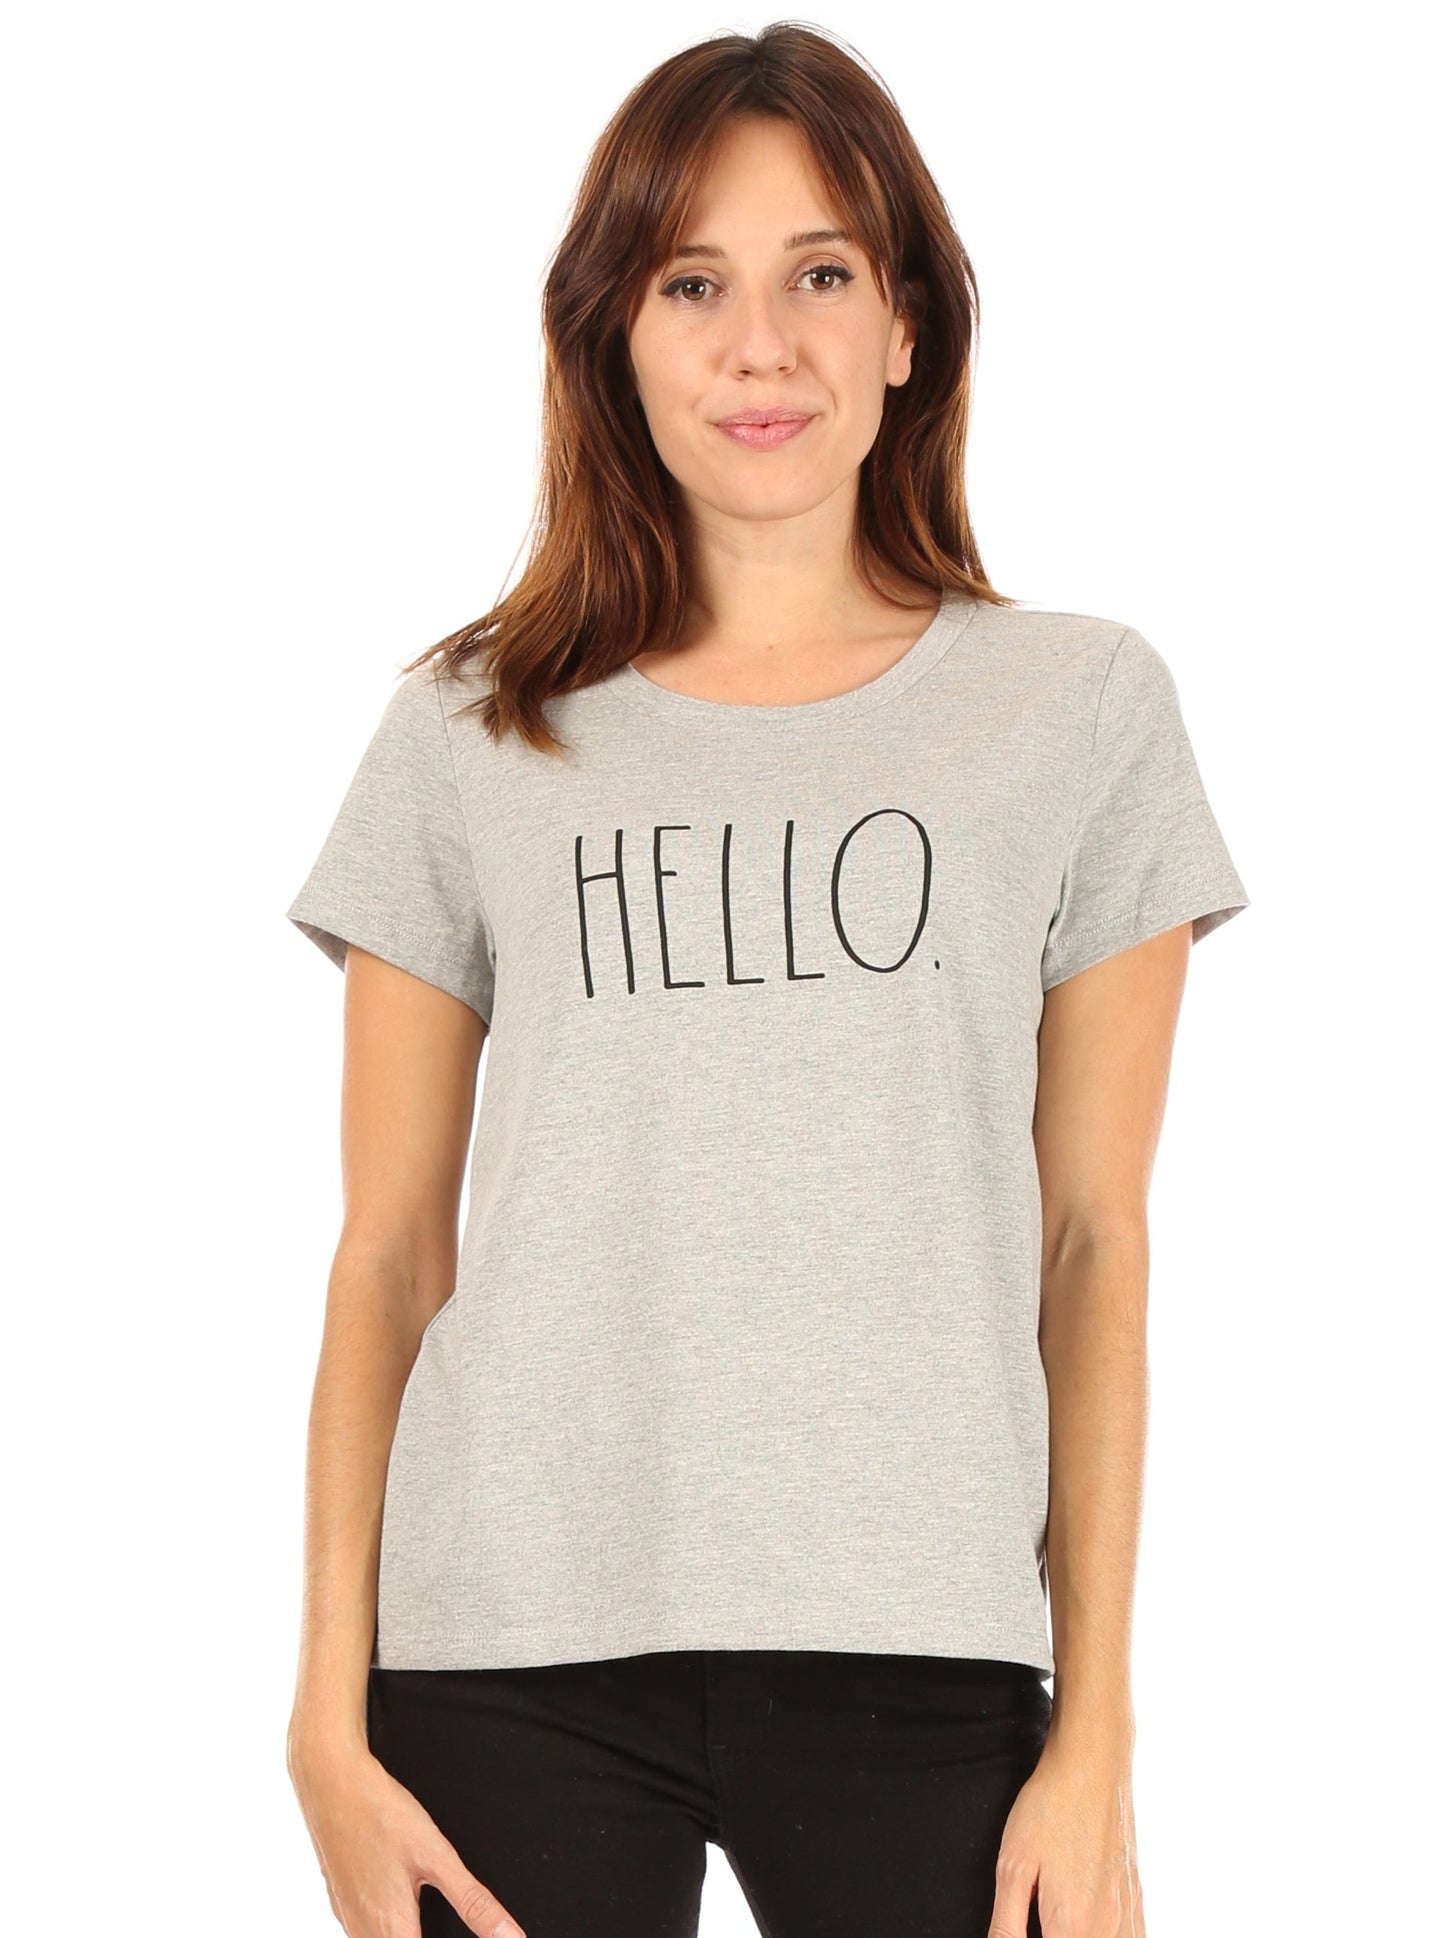 Women's "HELLO" Short Sleeve Icon T-Shirt - Rae Dunn Wear - W T-Shirt